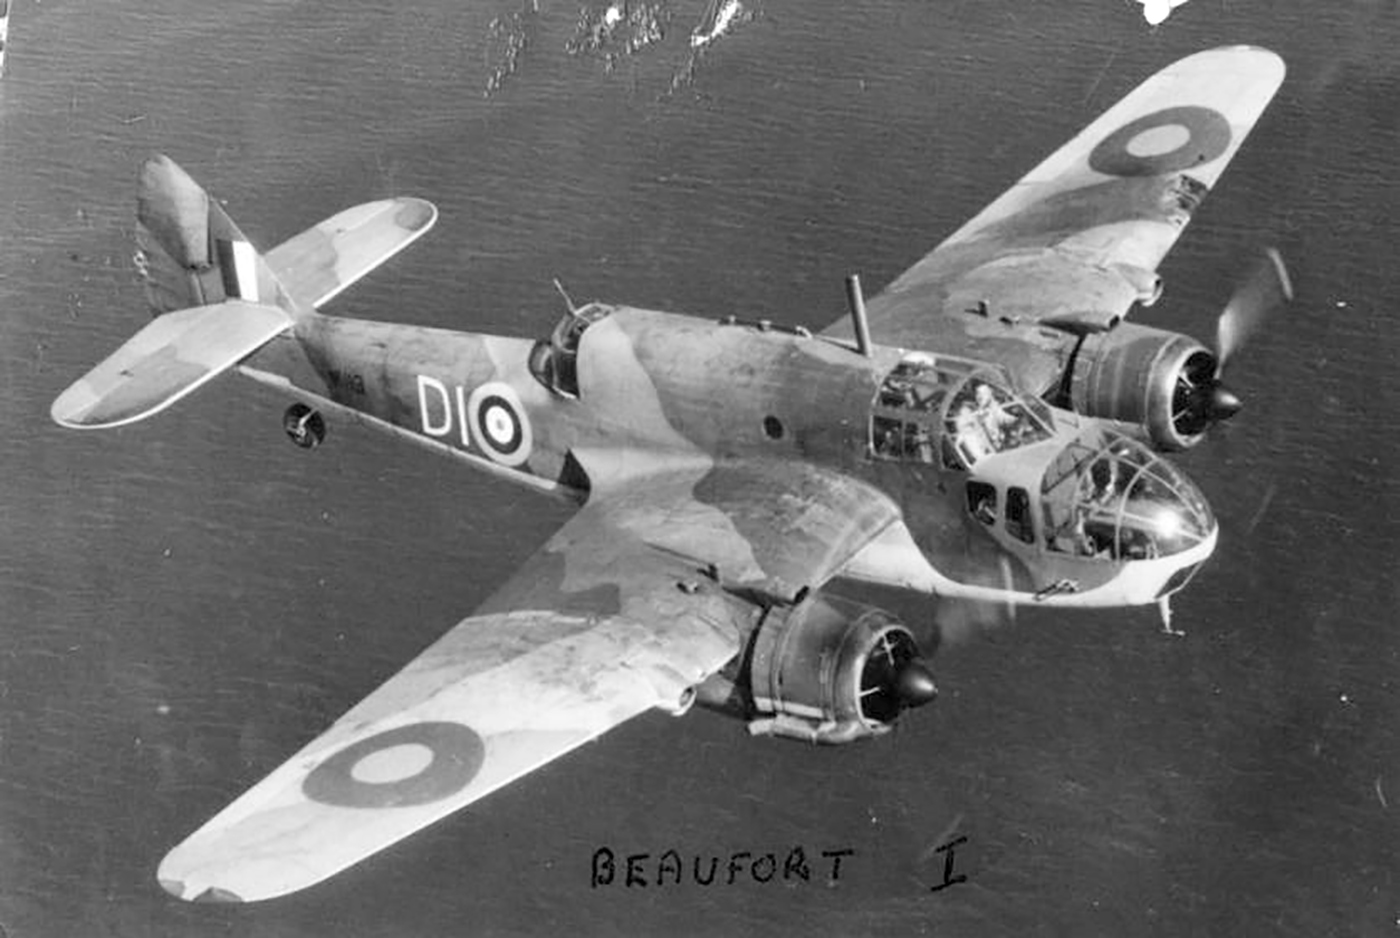 Bristol Beaufort I coded DI 01